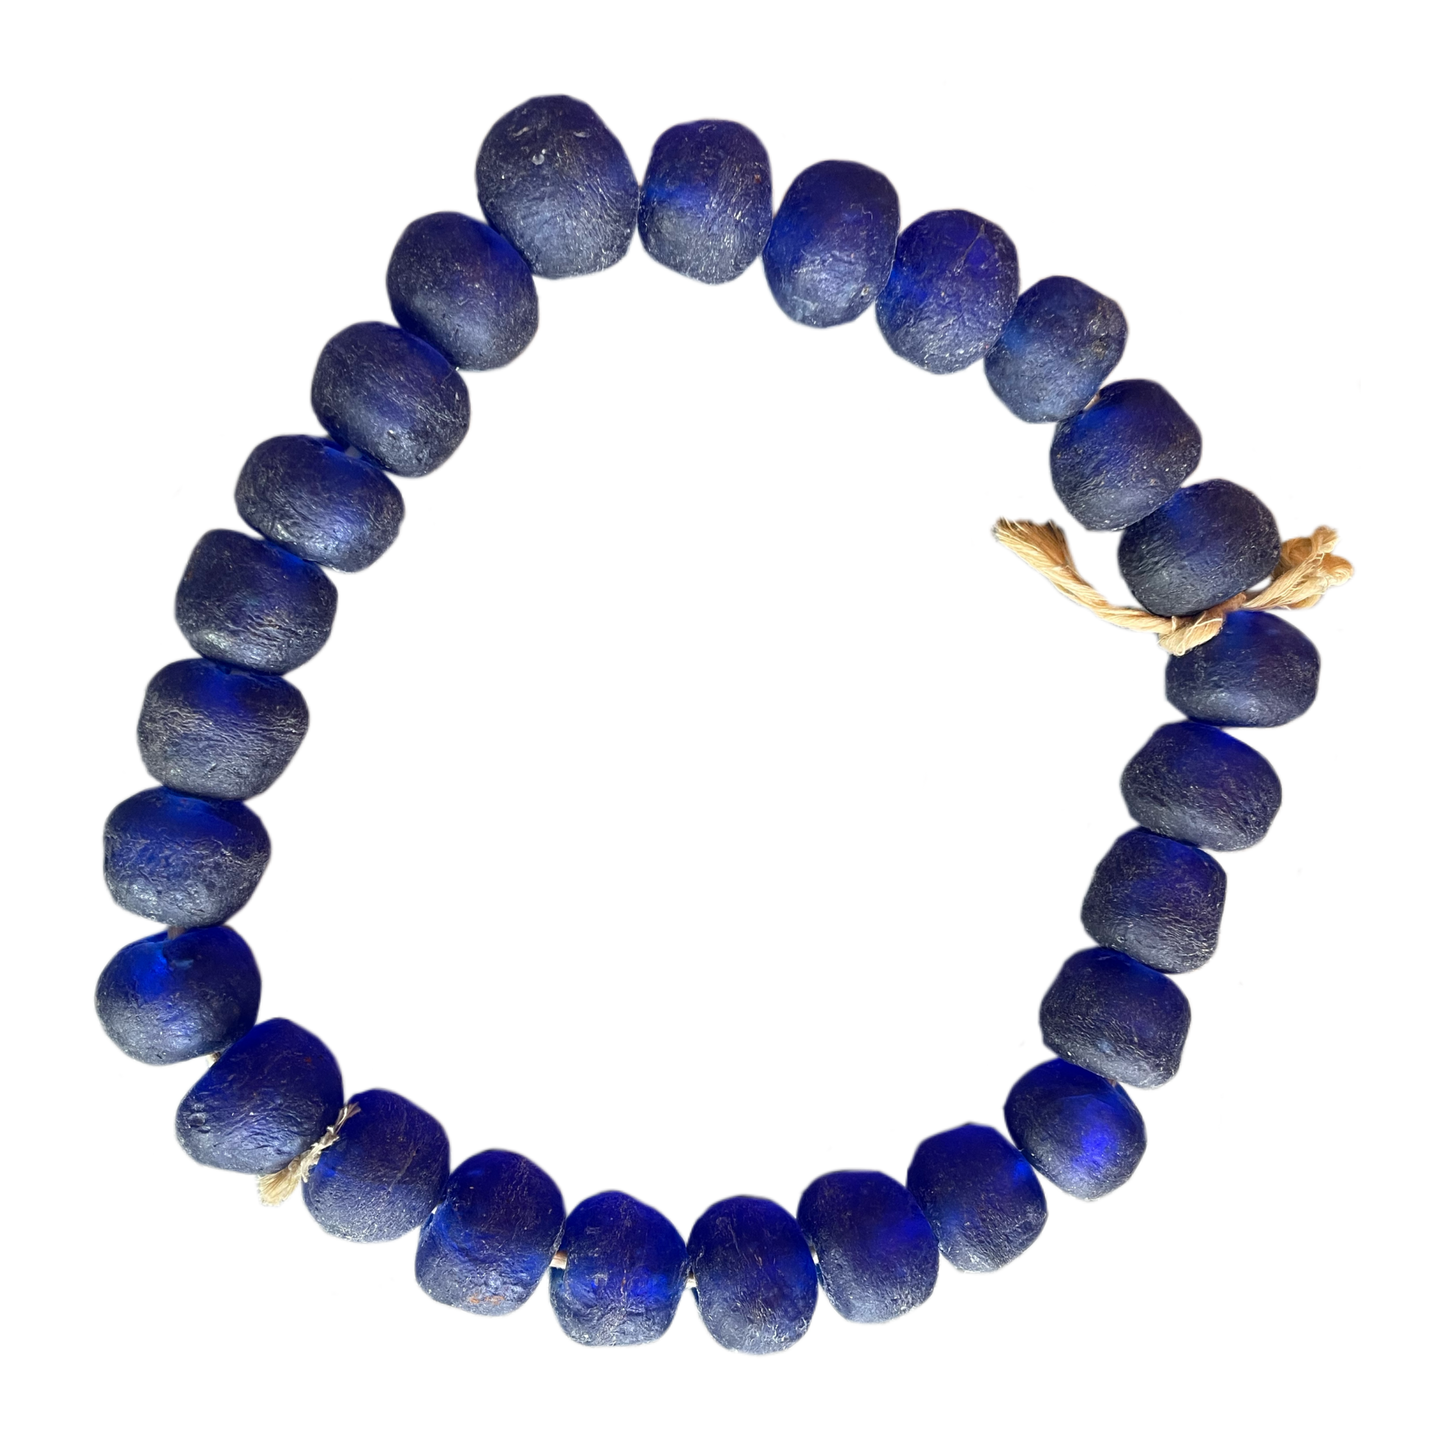 Blue Seaglass Beads